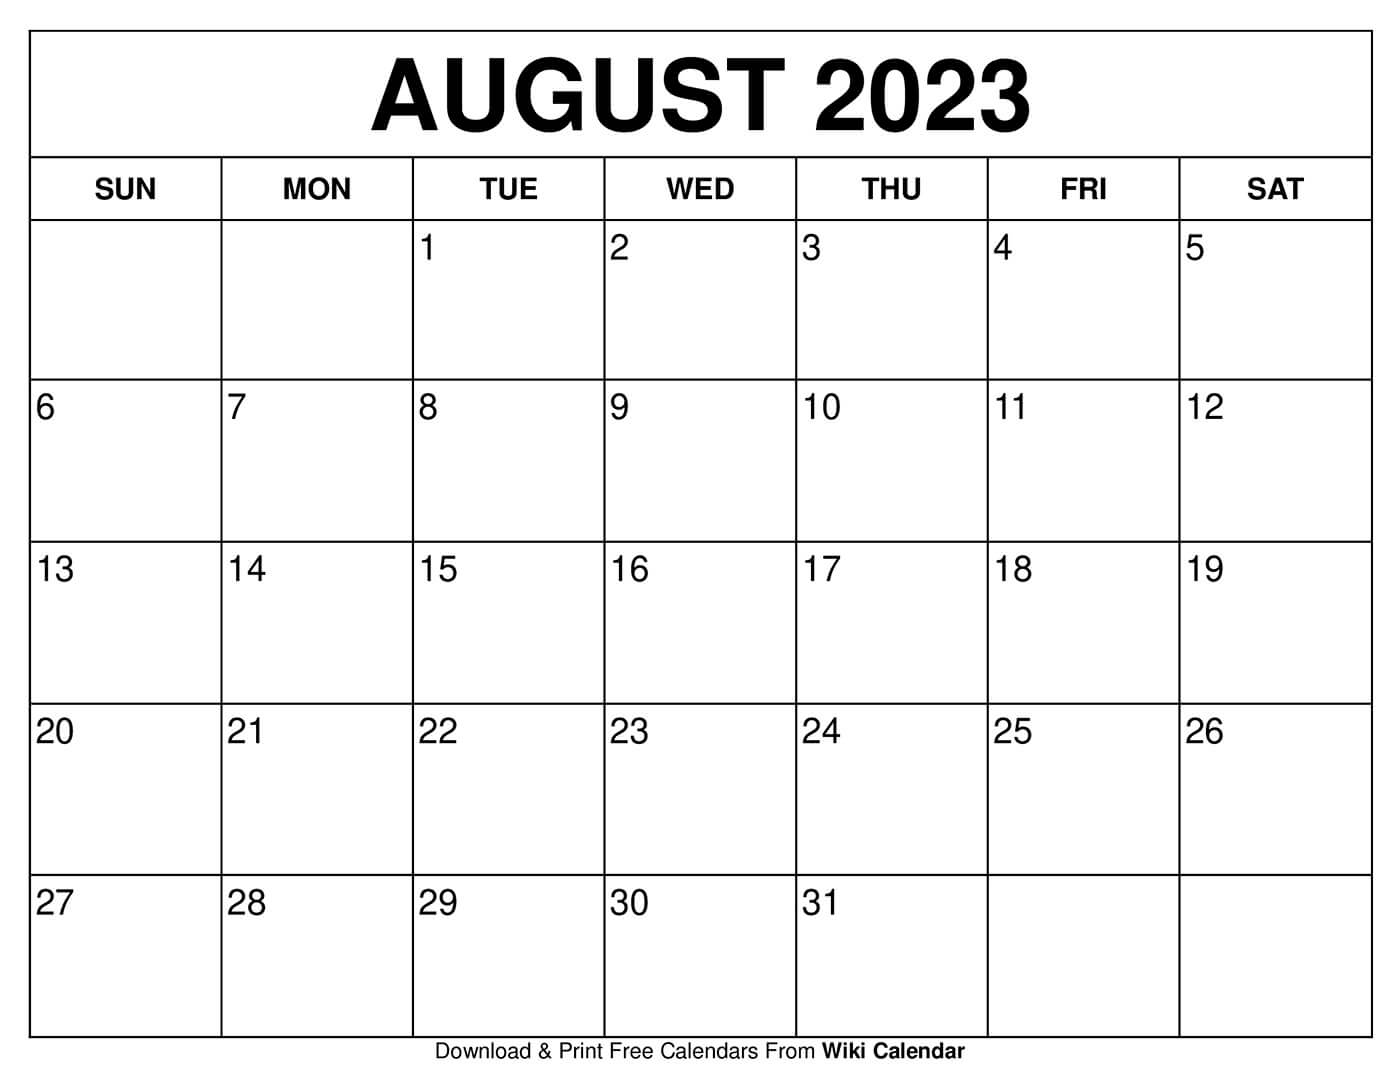 Print June 2022 Calendar Free Printable August 2022 Calendars - Wiki Calendar